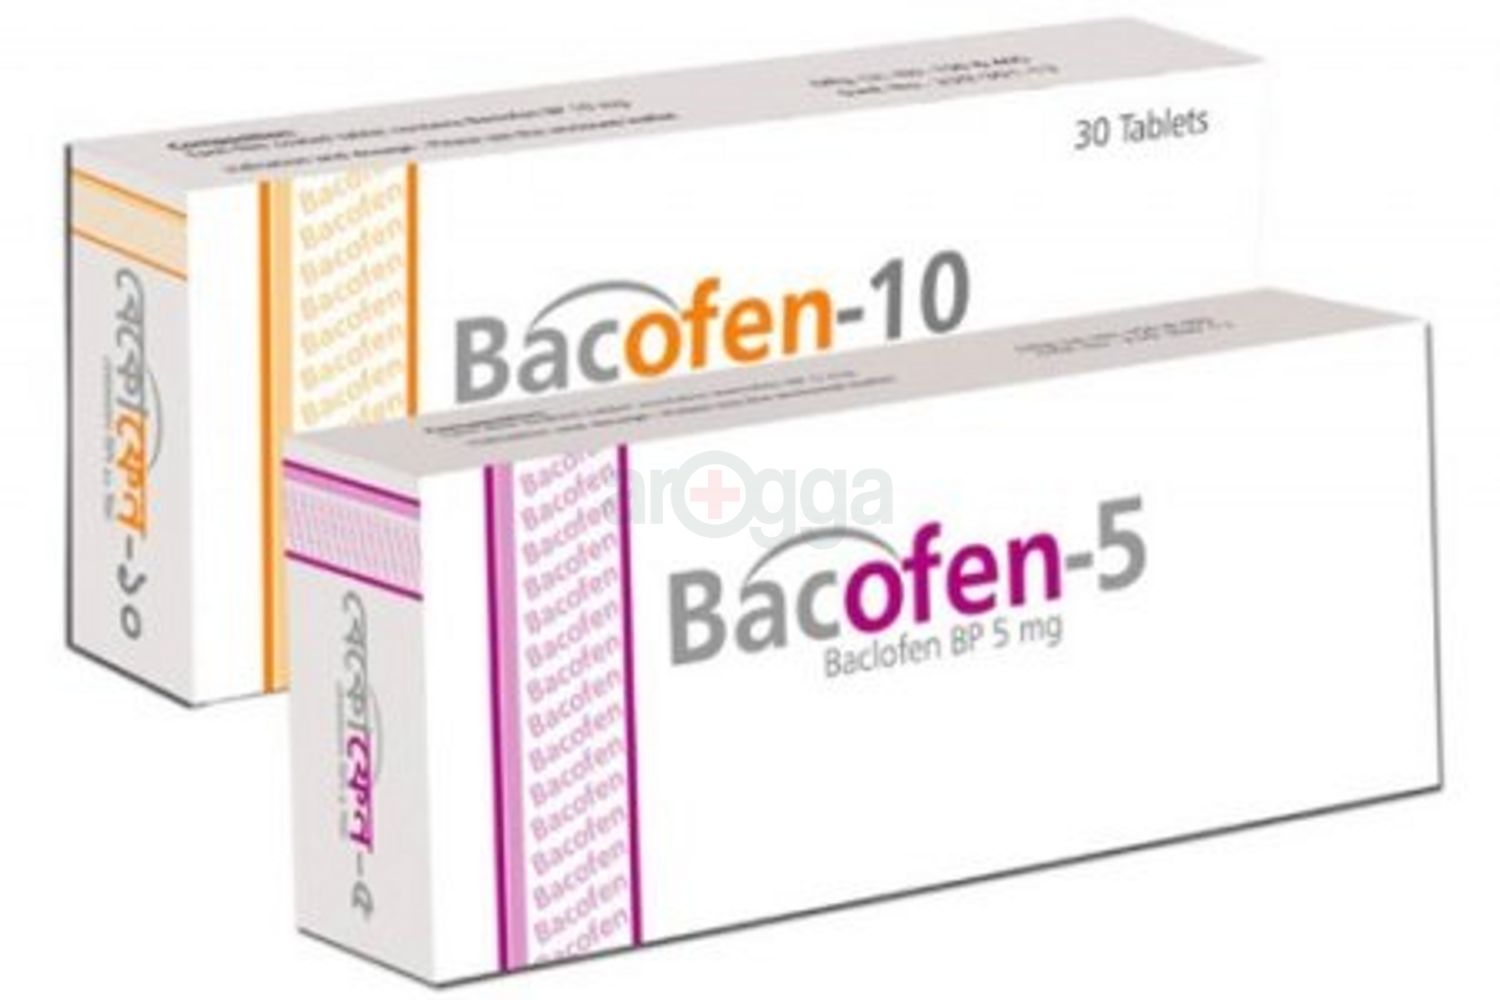 Bacofen 5